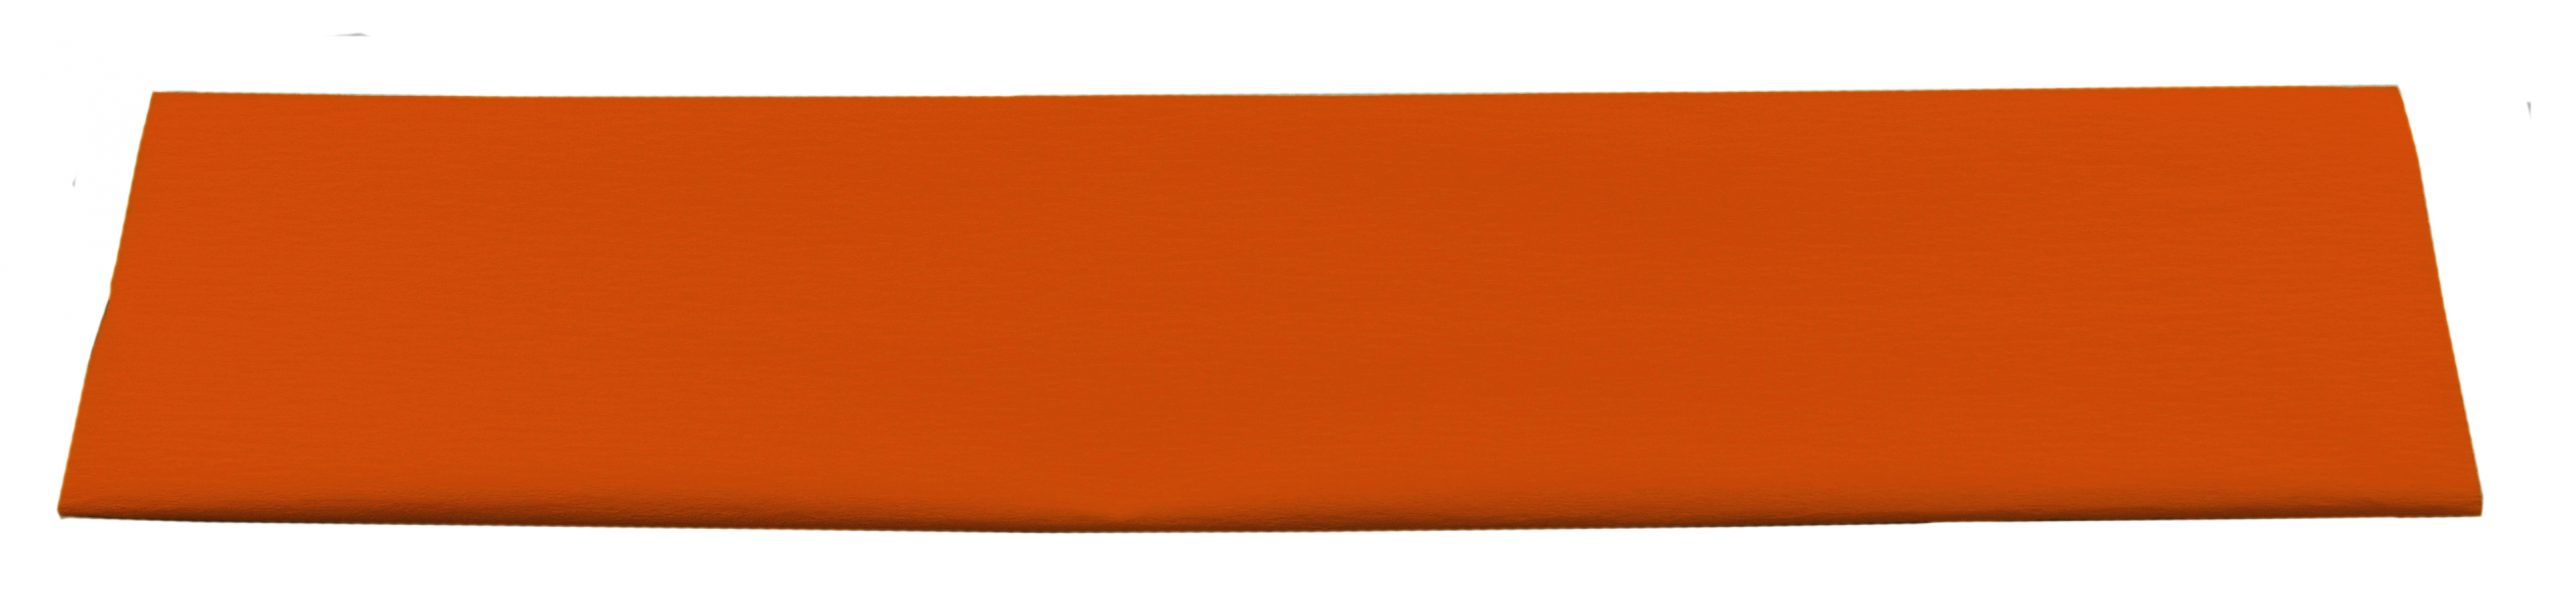 Hârtie creponată Hobby 50 x 200 cm, portocaliu, Herlitz